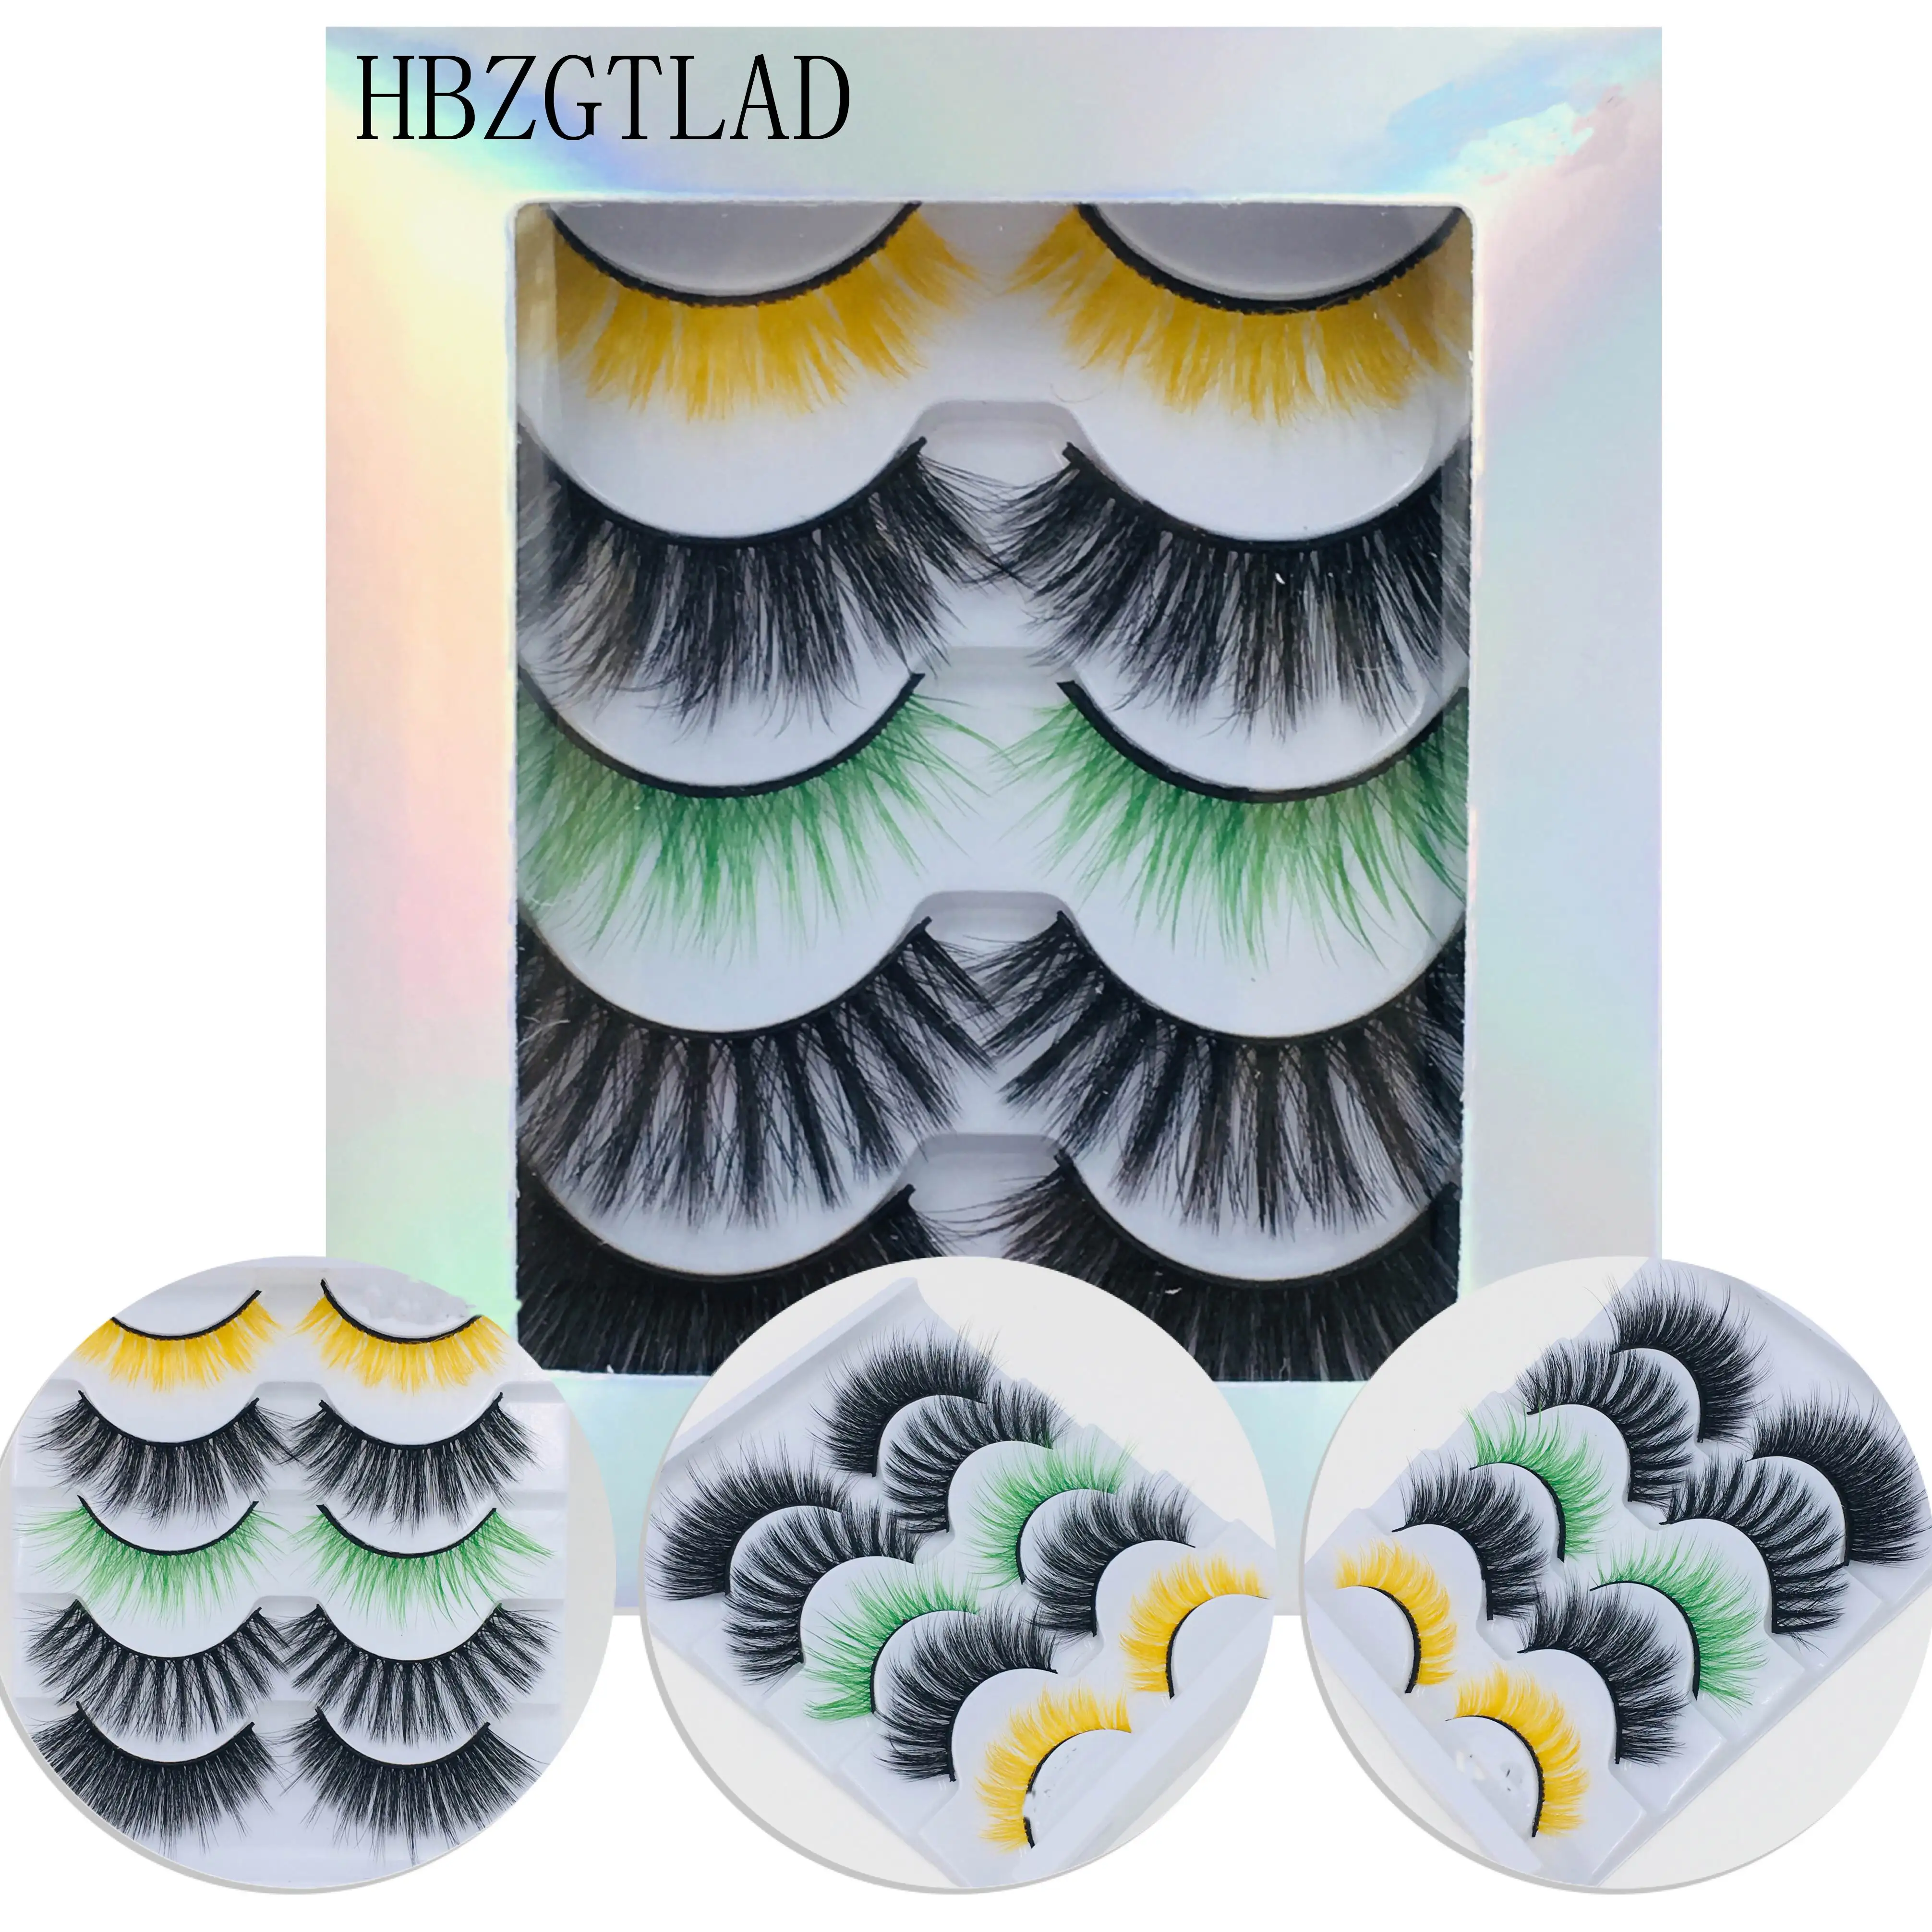 

Colored black 3D Mink Hair False Eyelashes Criss-cross Wispy Cross Fluffy 22mm-25mm Lashes Extension Handmade Eye Makeup Tools